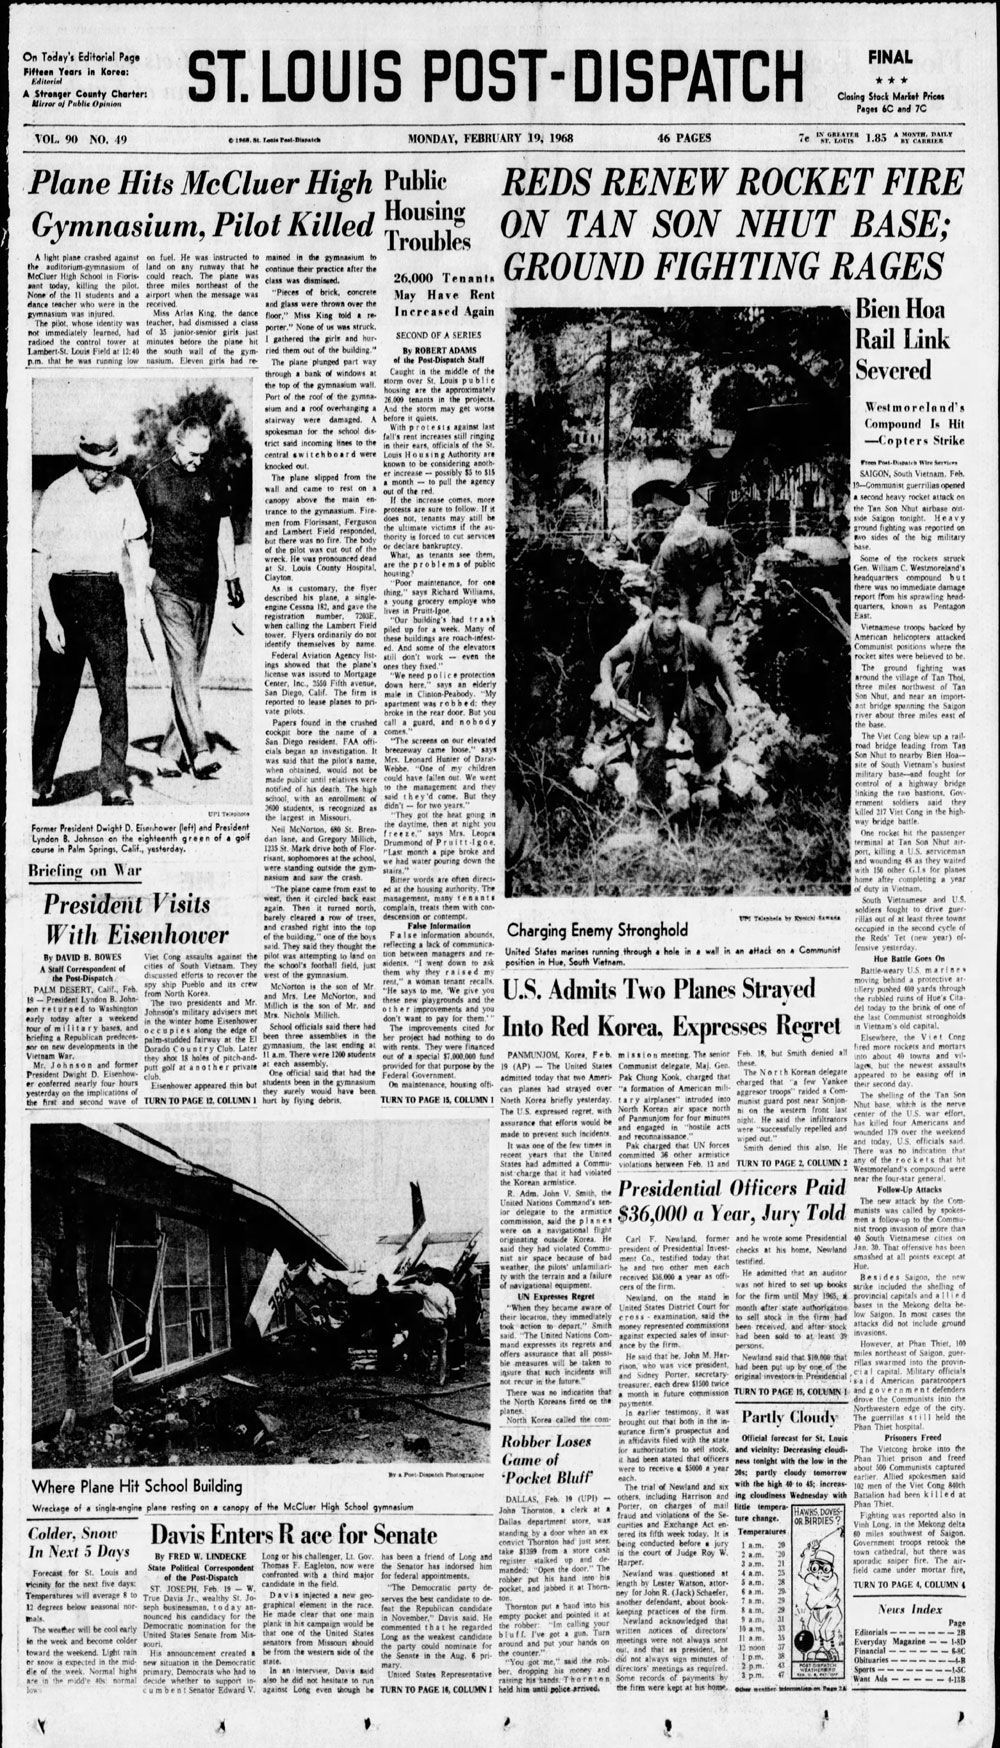 Feb. 19, 1968: Plane crashes into McCluer High School gym, kiling pilot | Post-Dispatch Archives ...